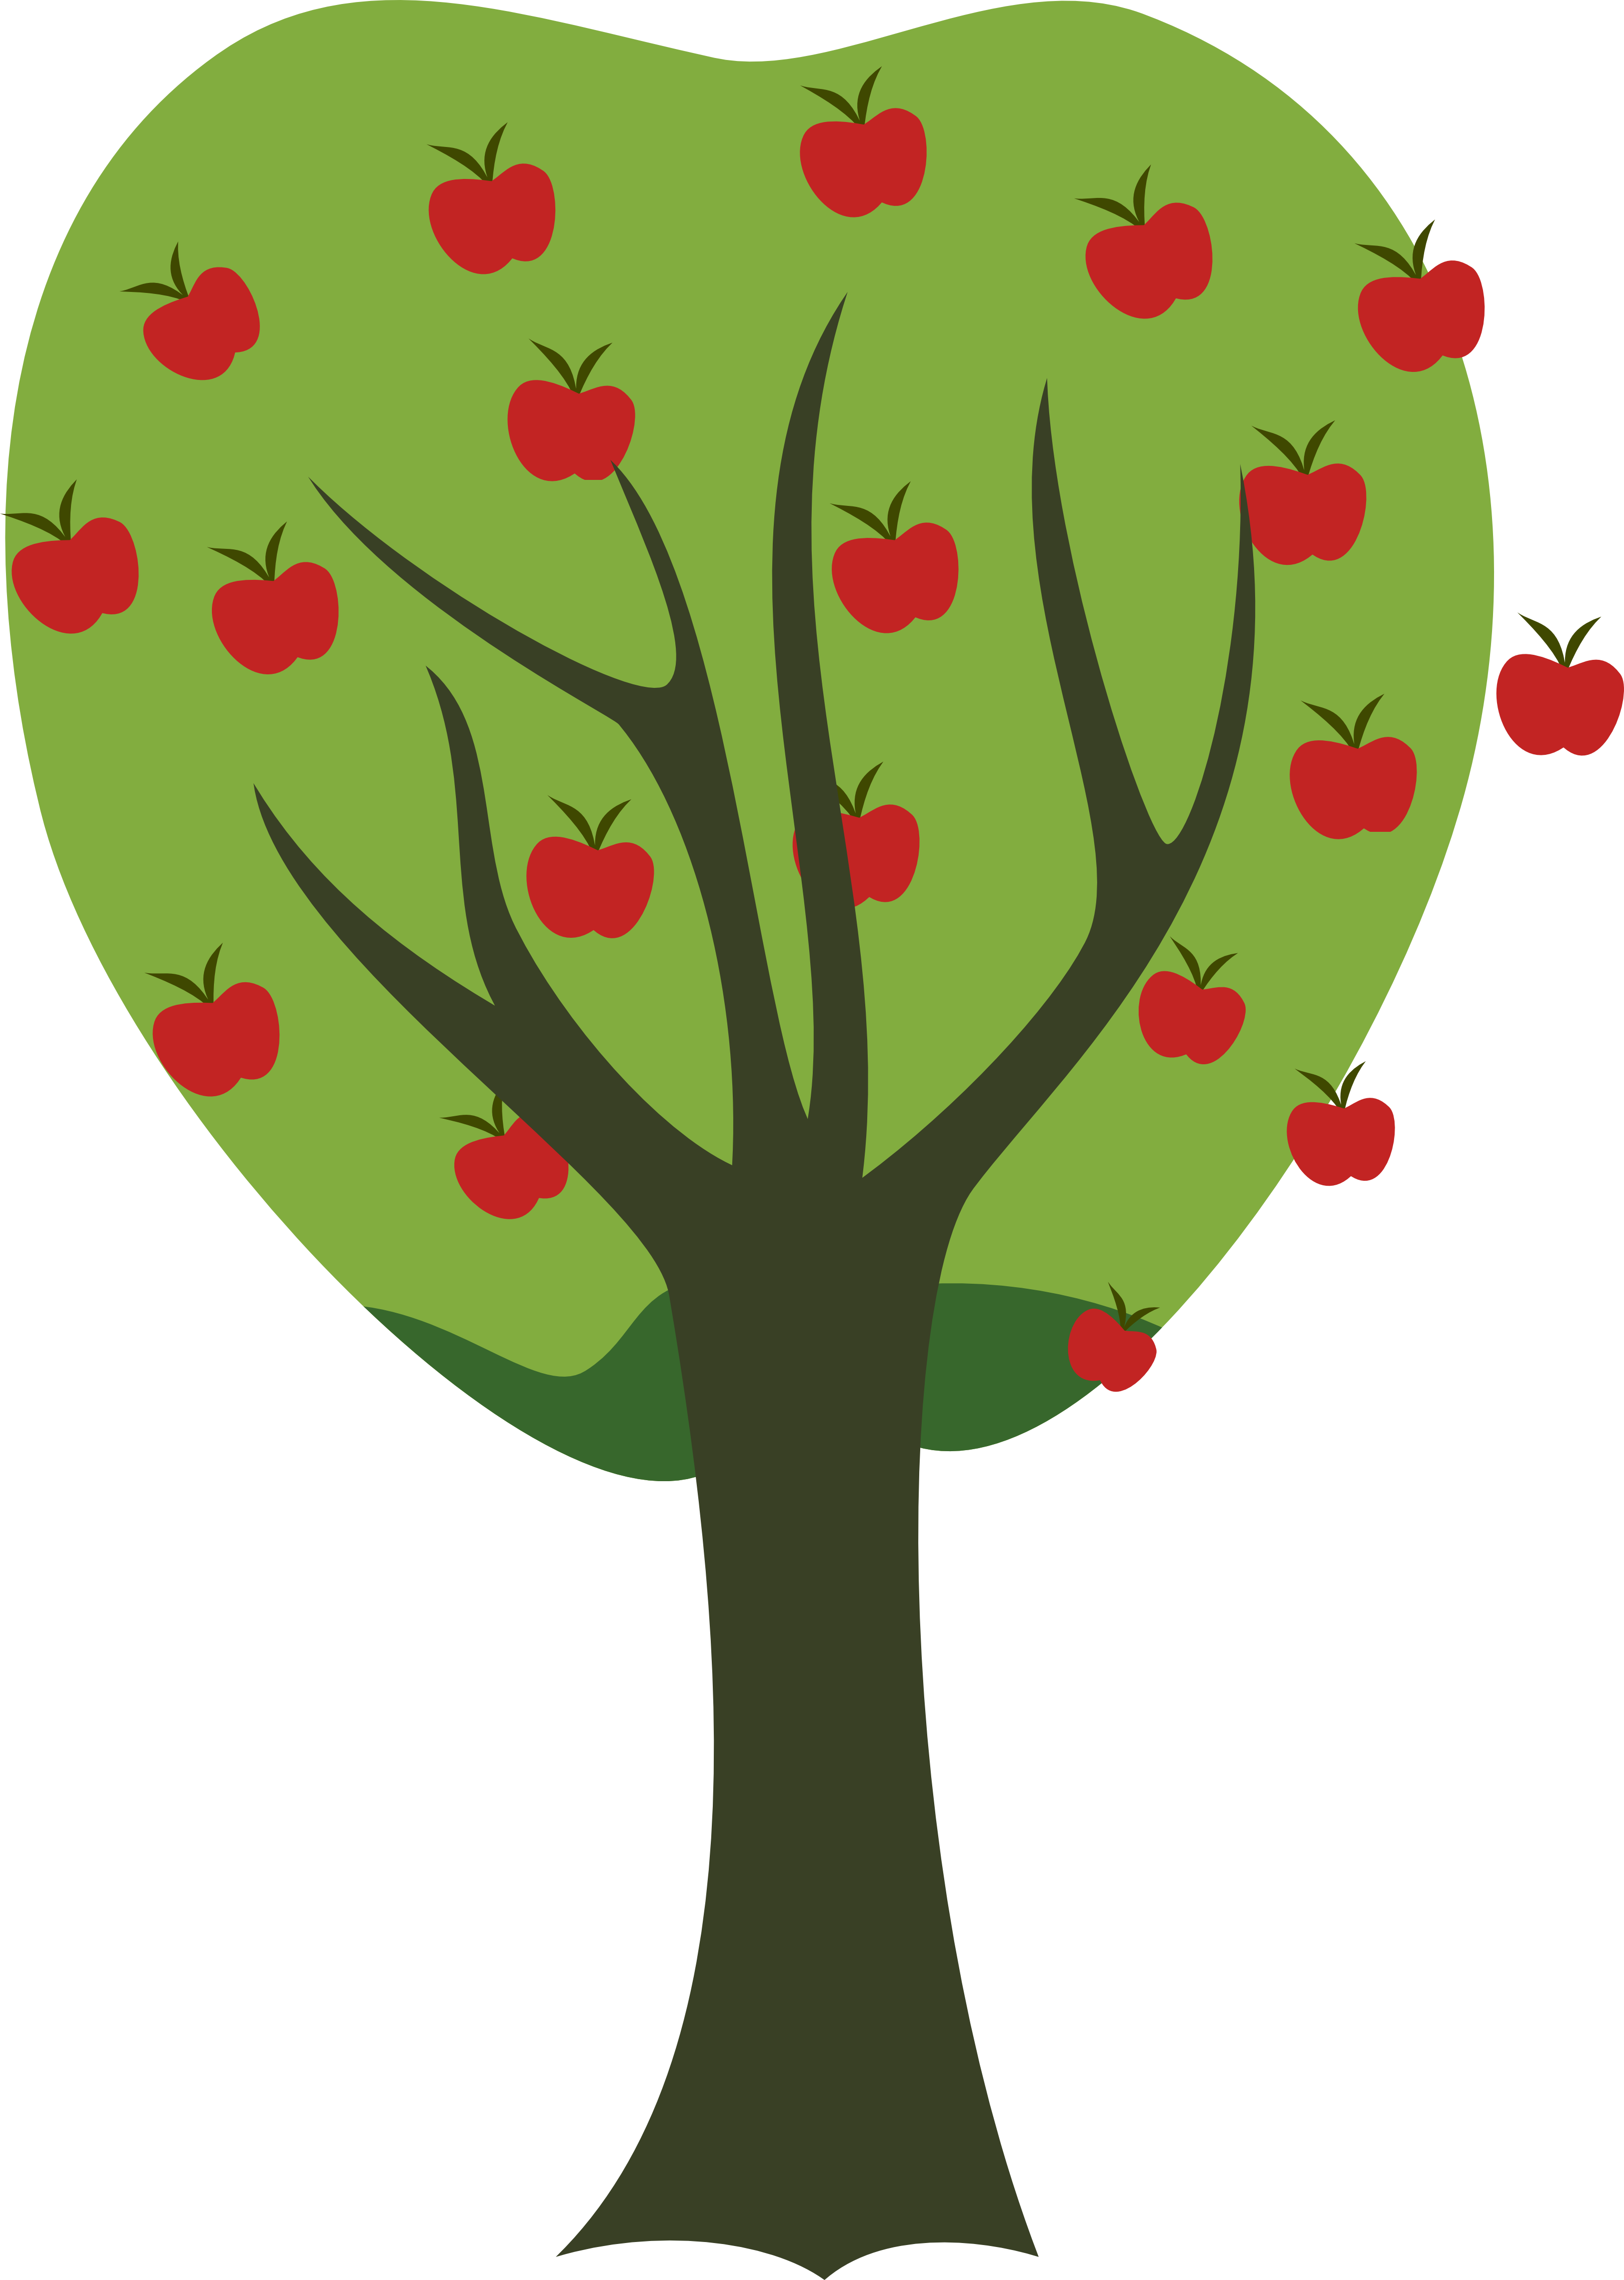 Apple Tree 1 by Catnipfairy on deviantART